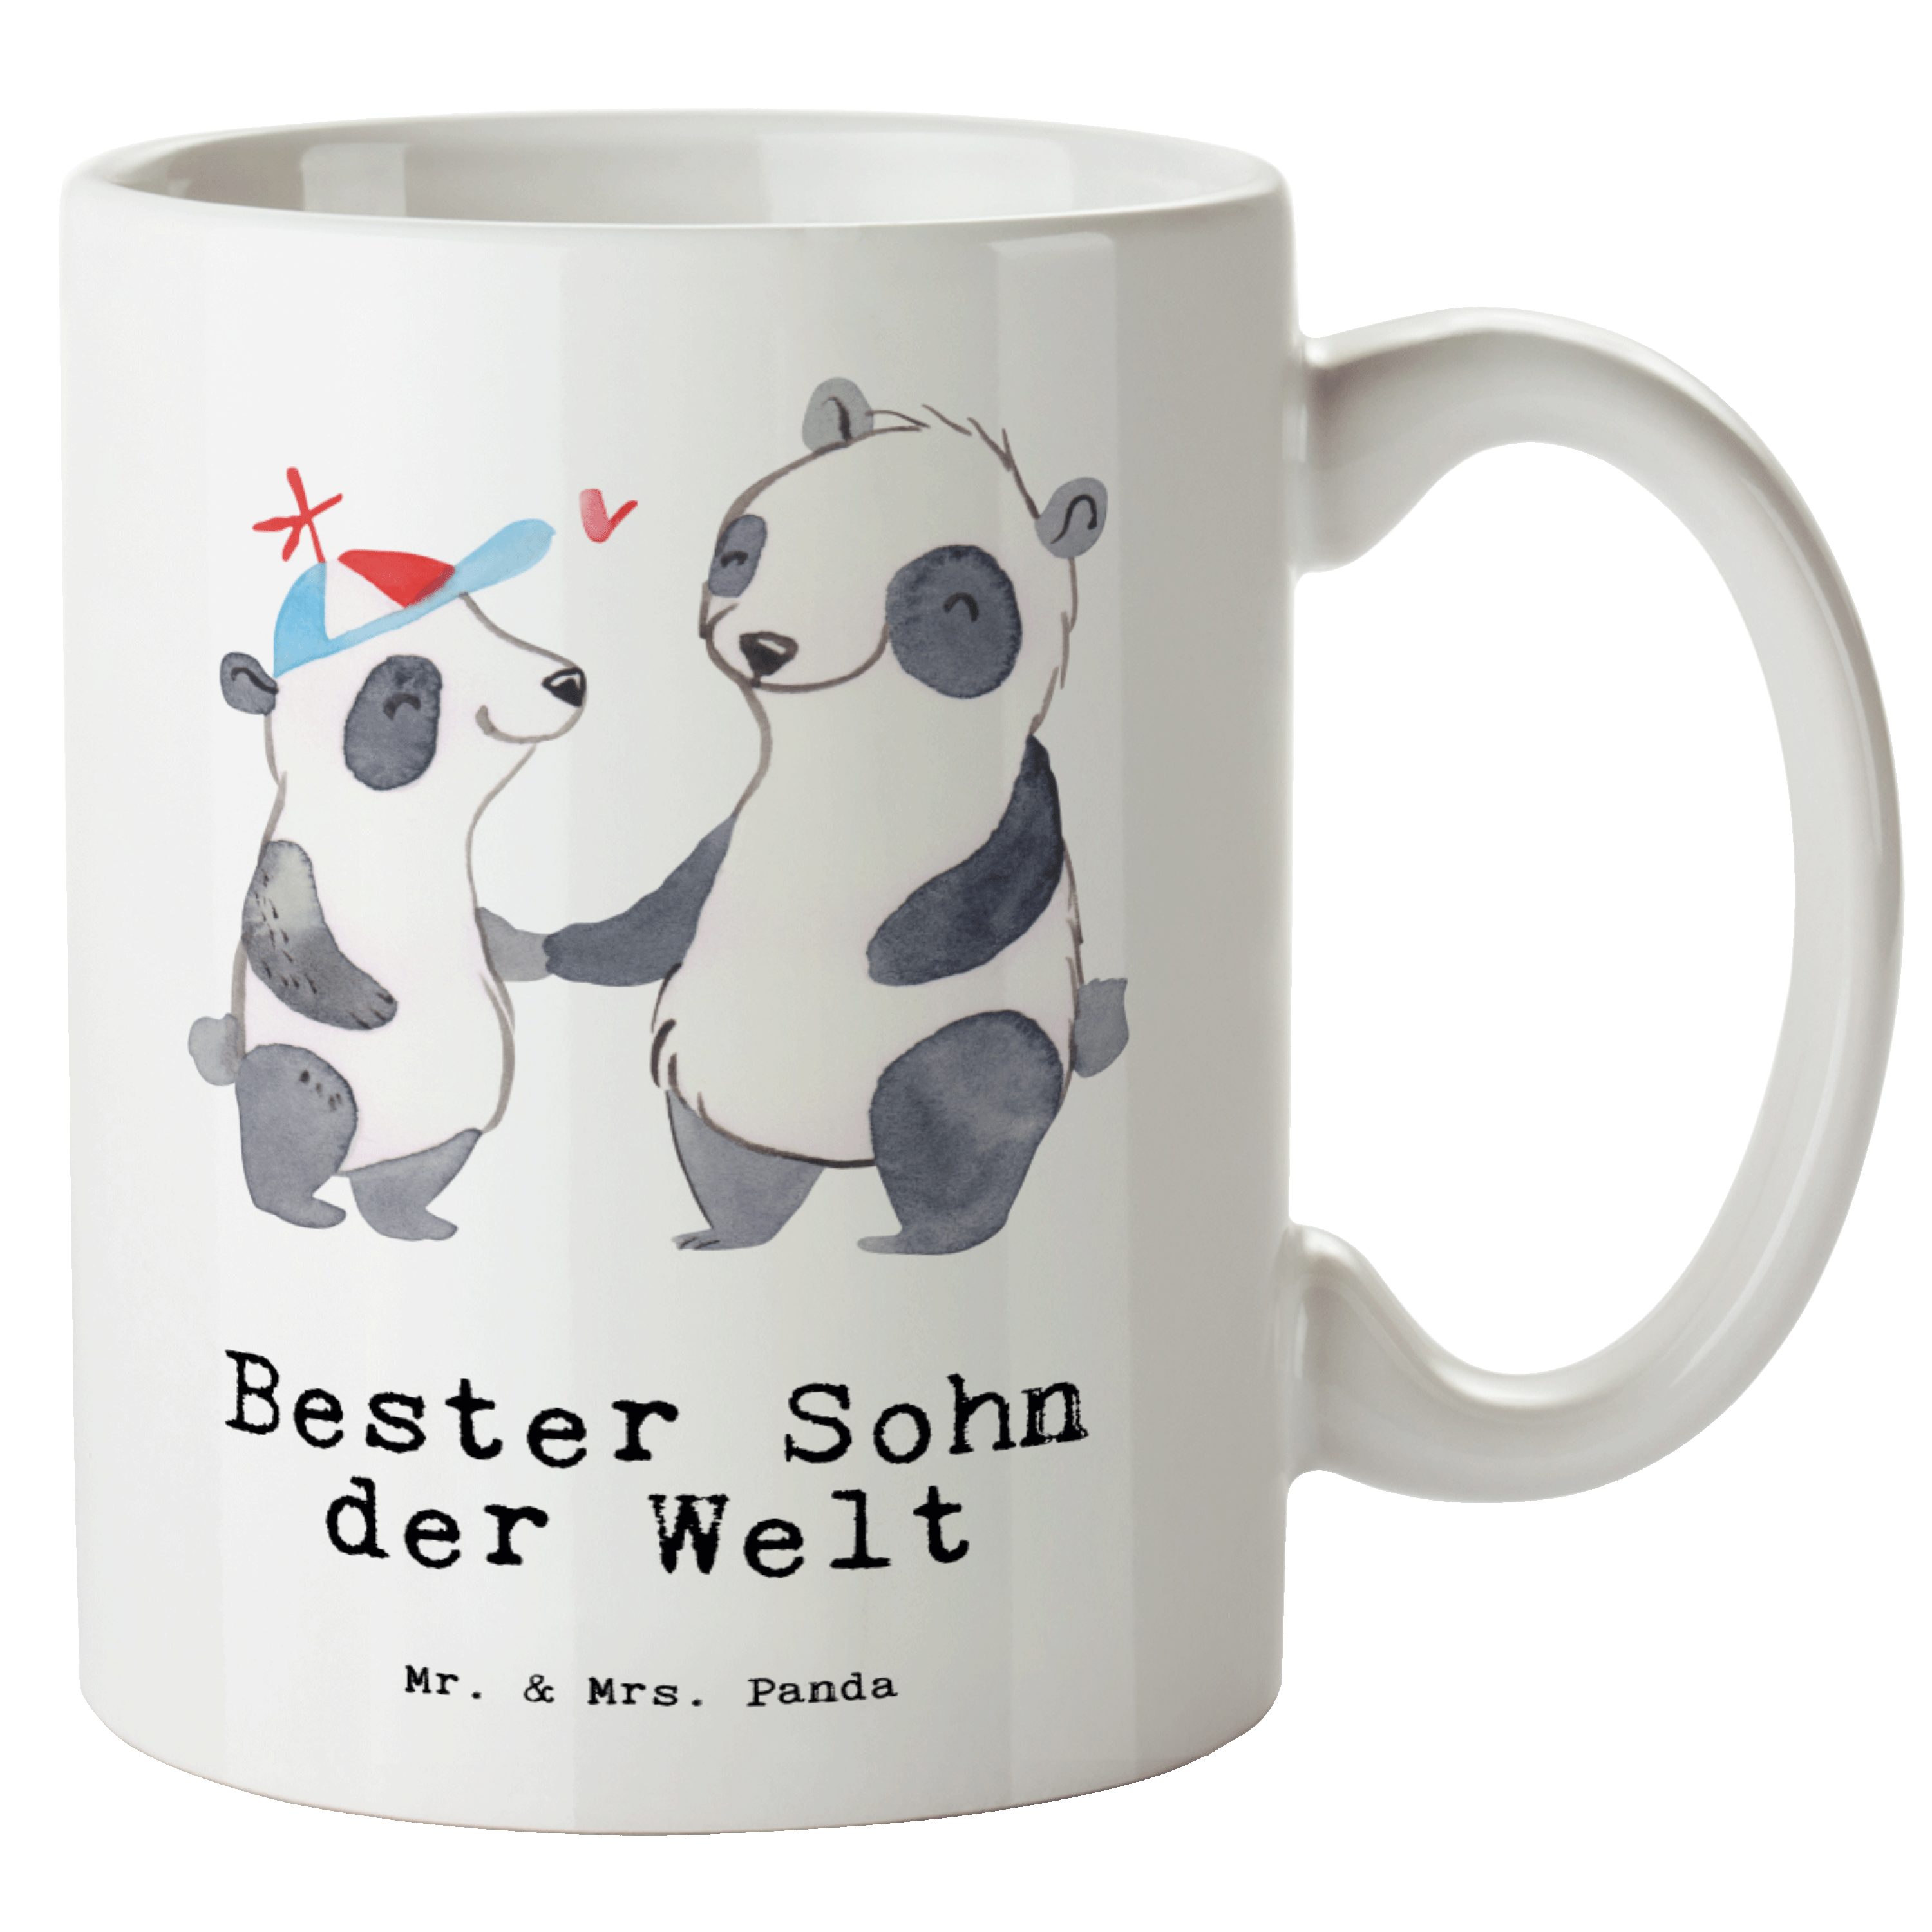 Mr. & Mrs. Panda Tasse Panda Bester Sohn der Welt - Weiß - Geschenk, Grosse Kaffeetasse, Gro, XL Tasse Keramik